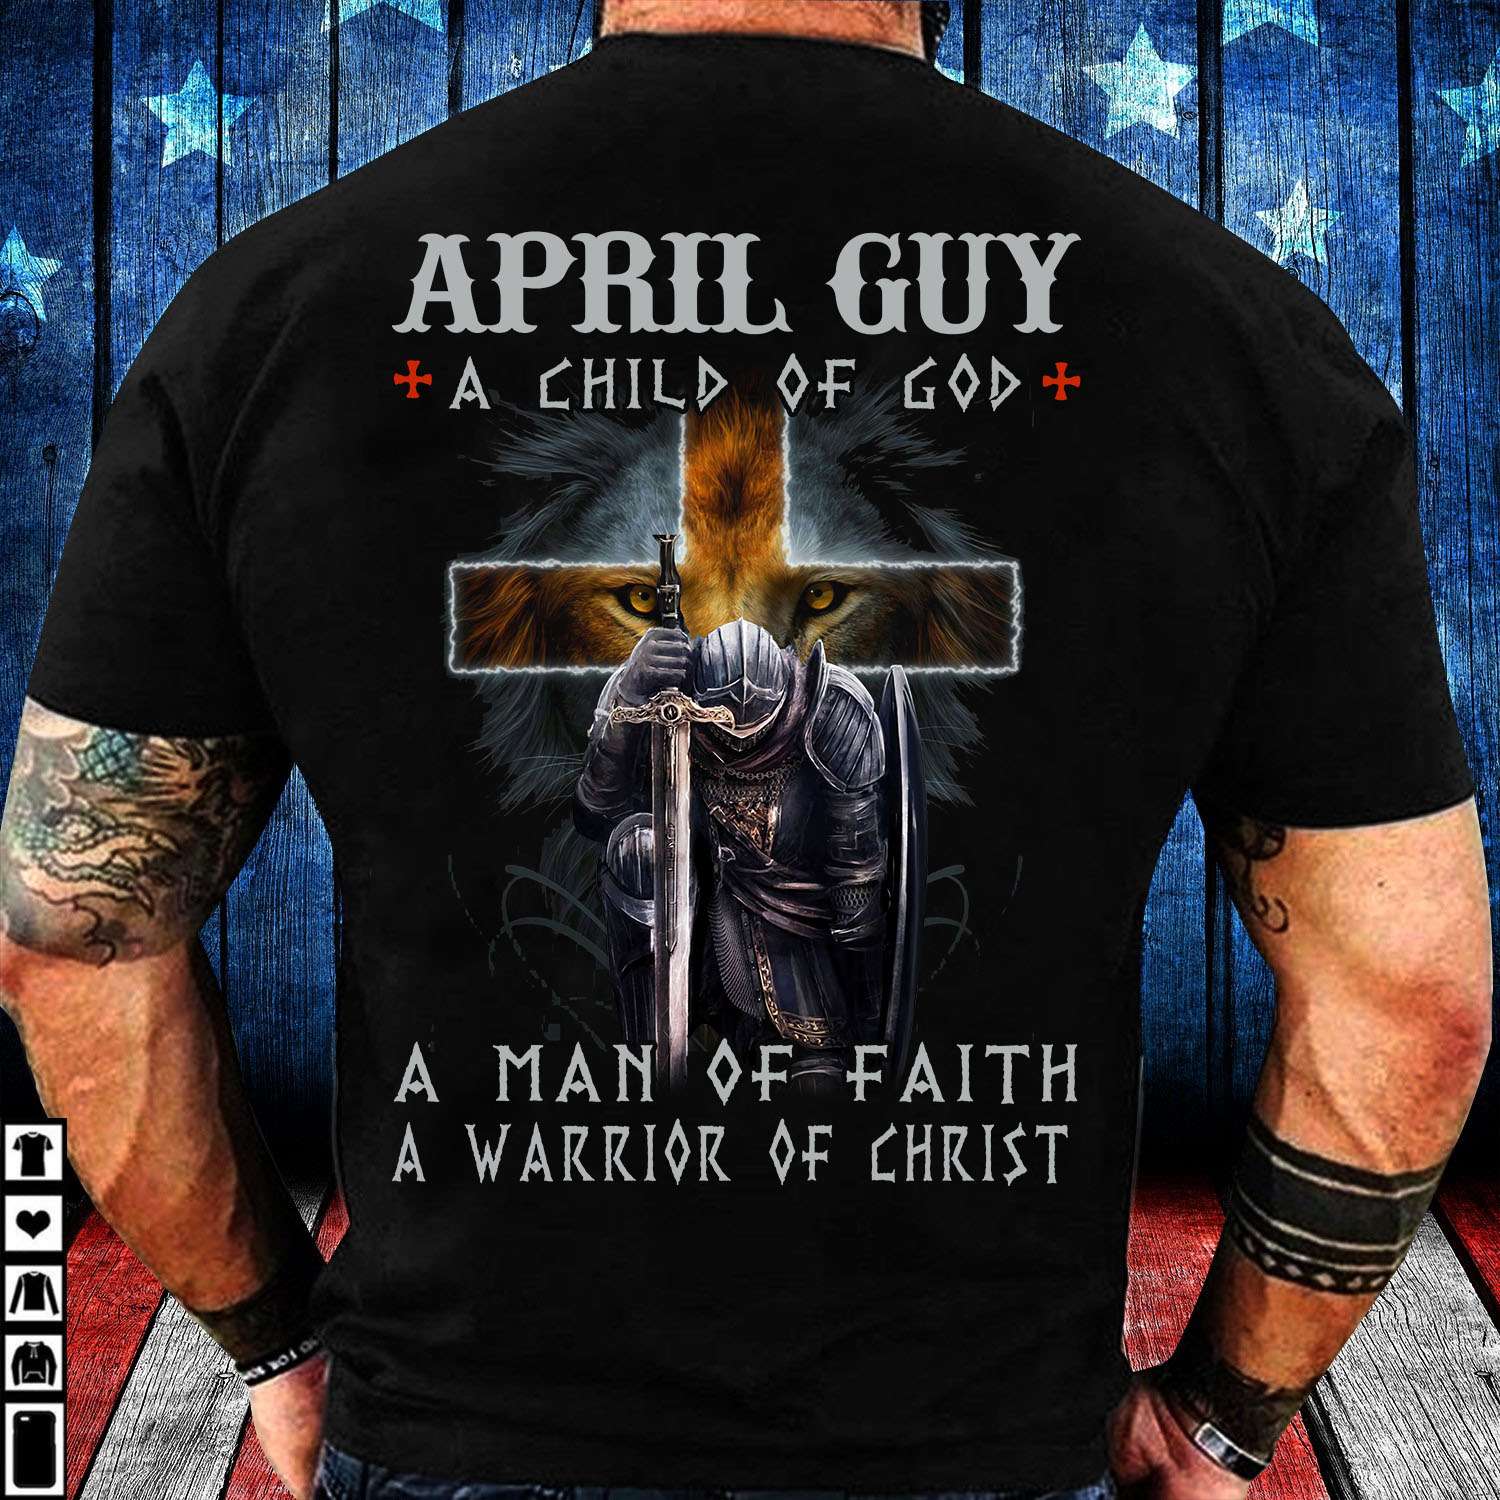 April Birthday God's Warrior - April guy a child of god a man of faith a warrior of christ